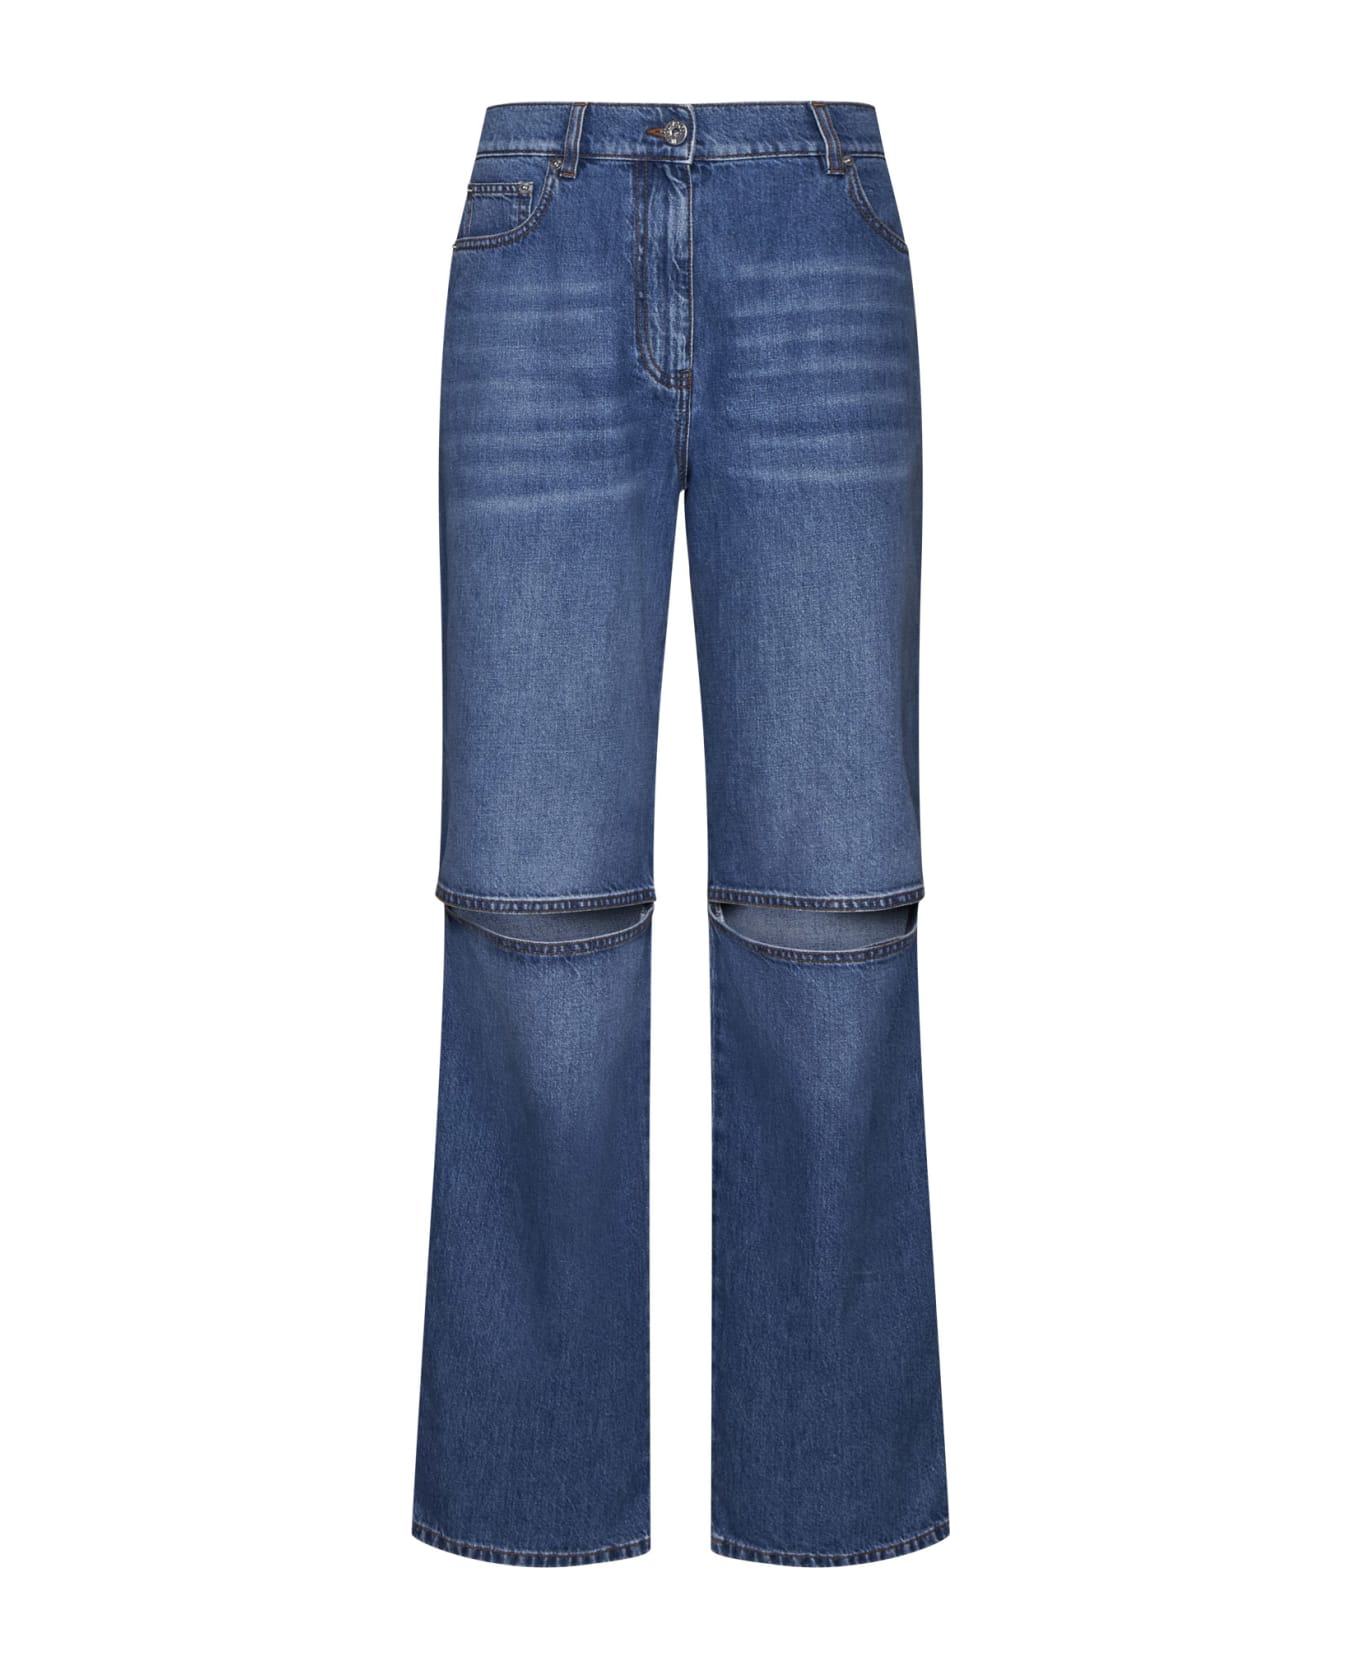 J.W. Anderson Jeans - Light blue